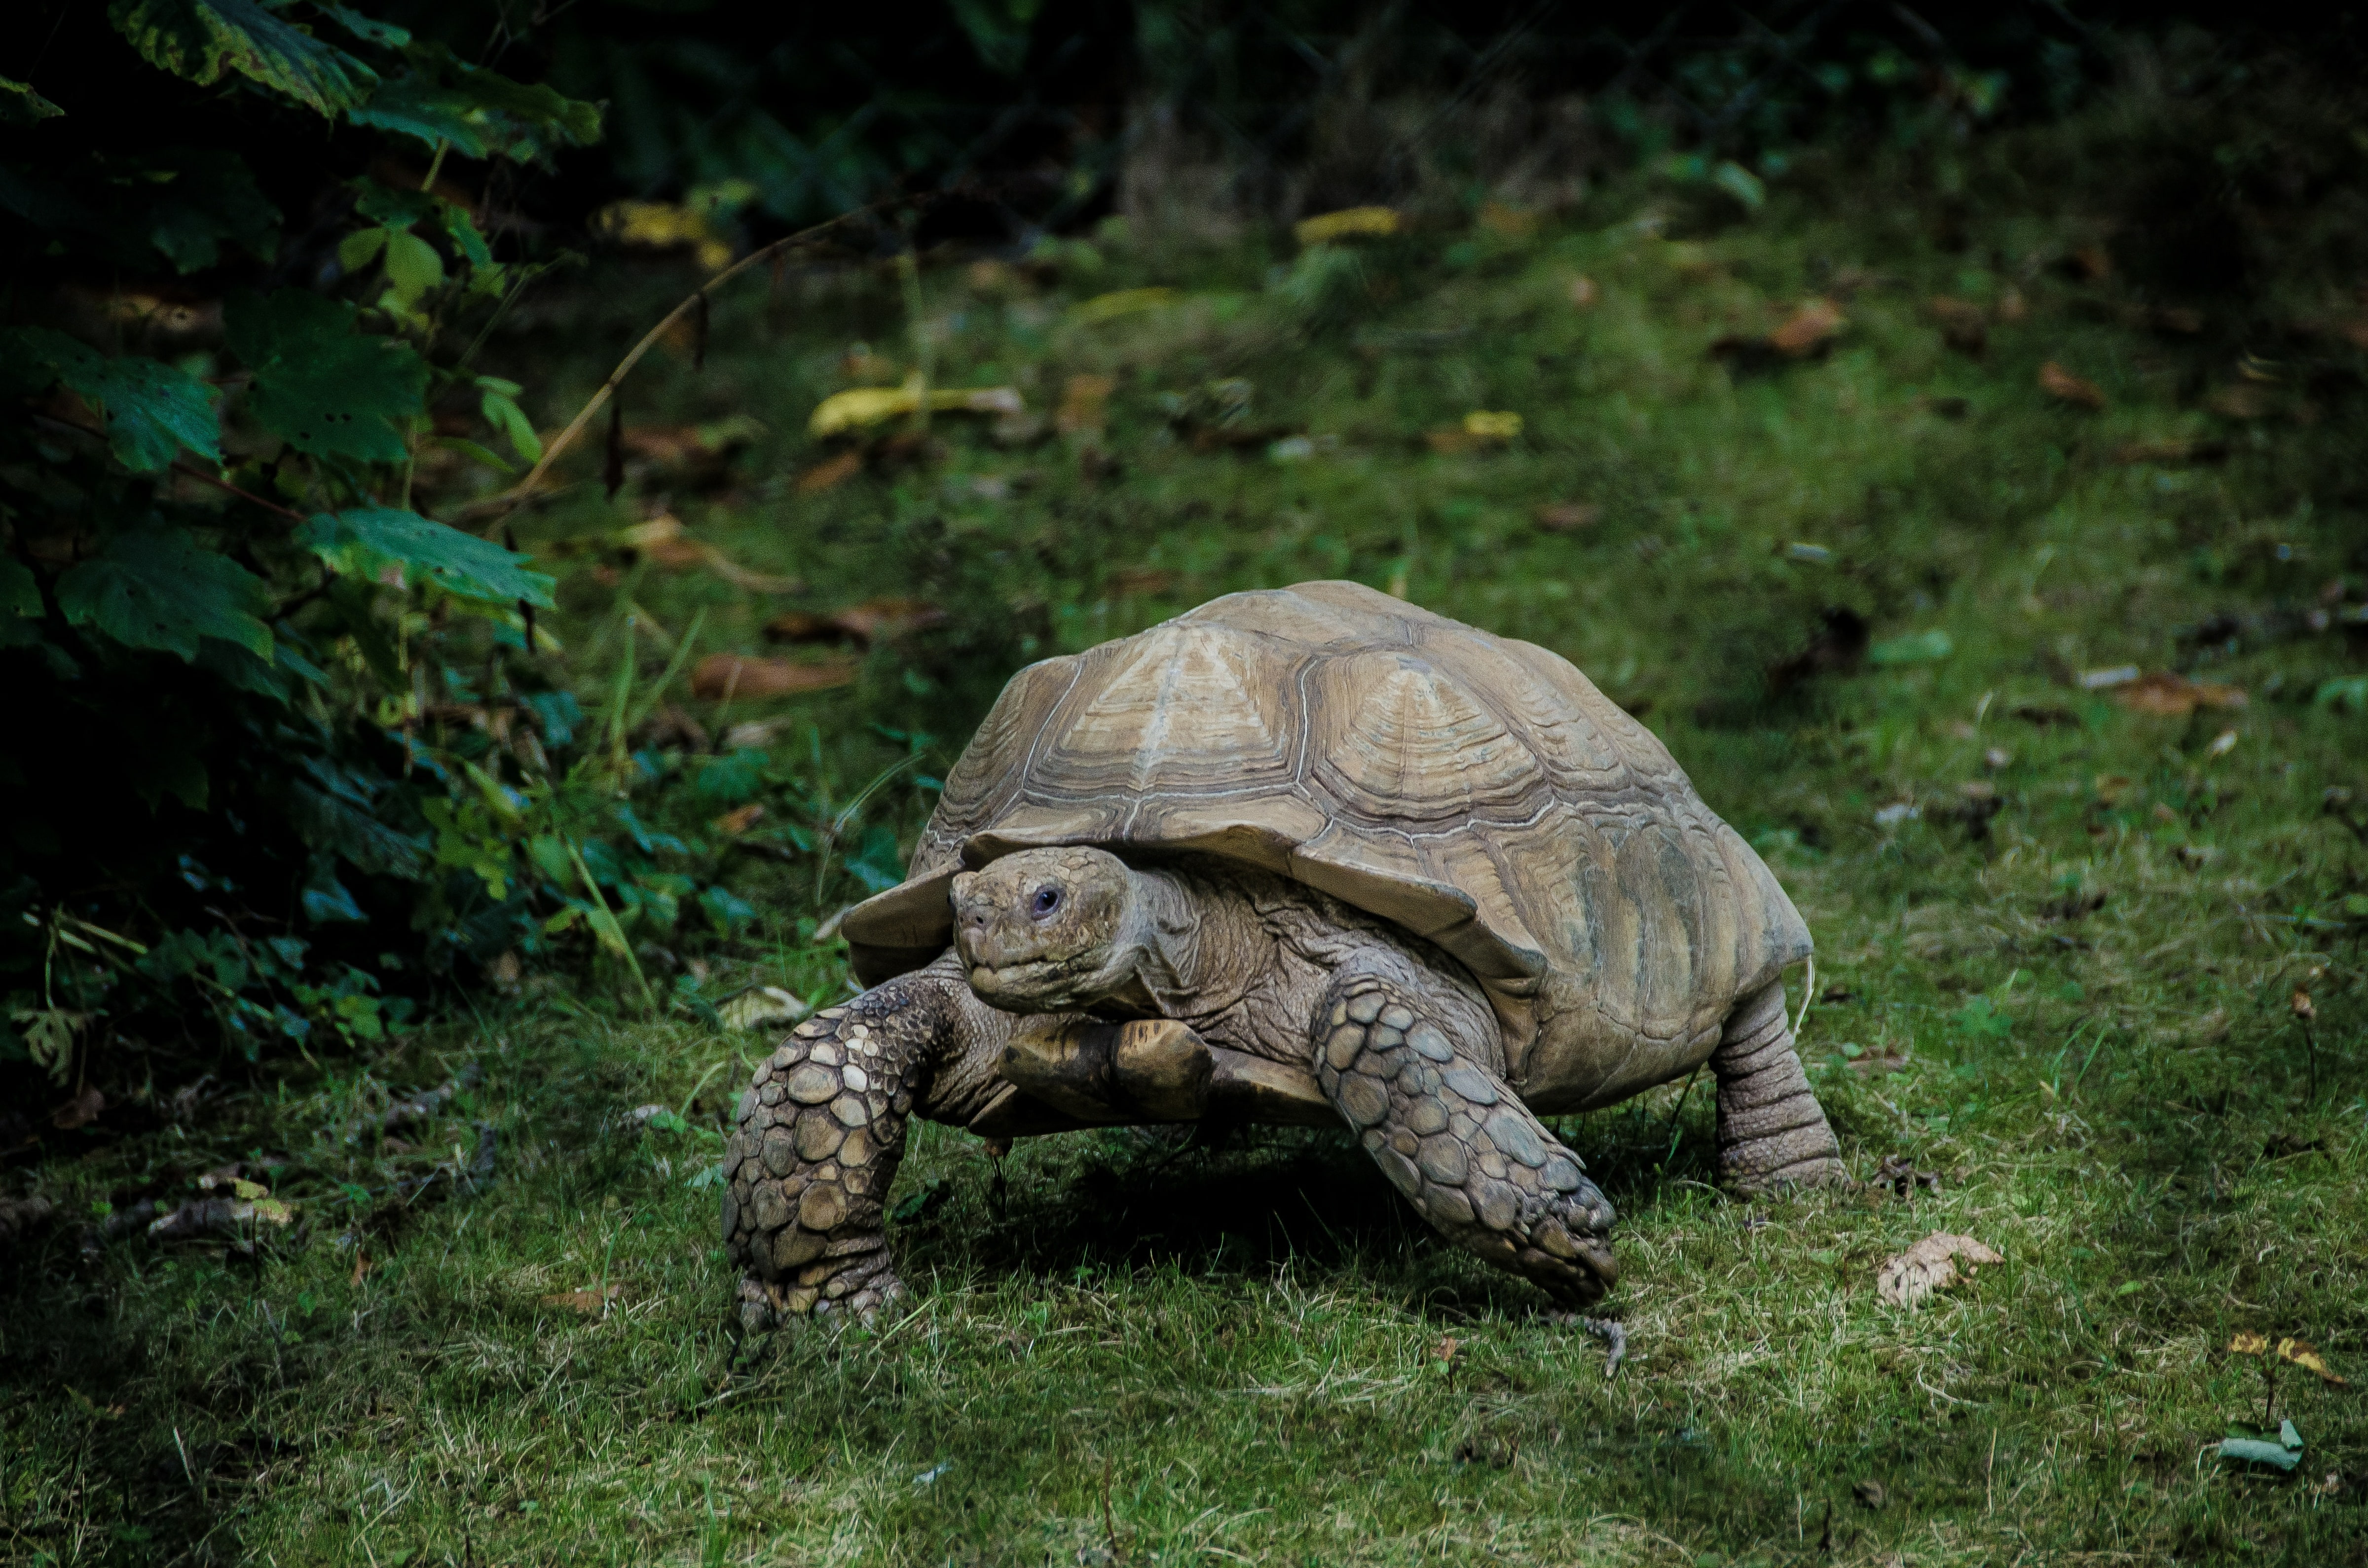 Tortoise walking in the lush grass.